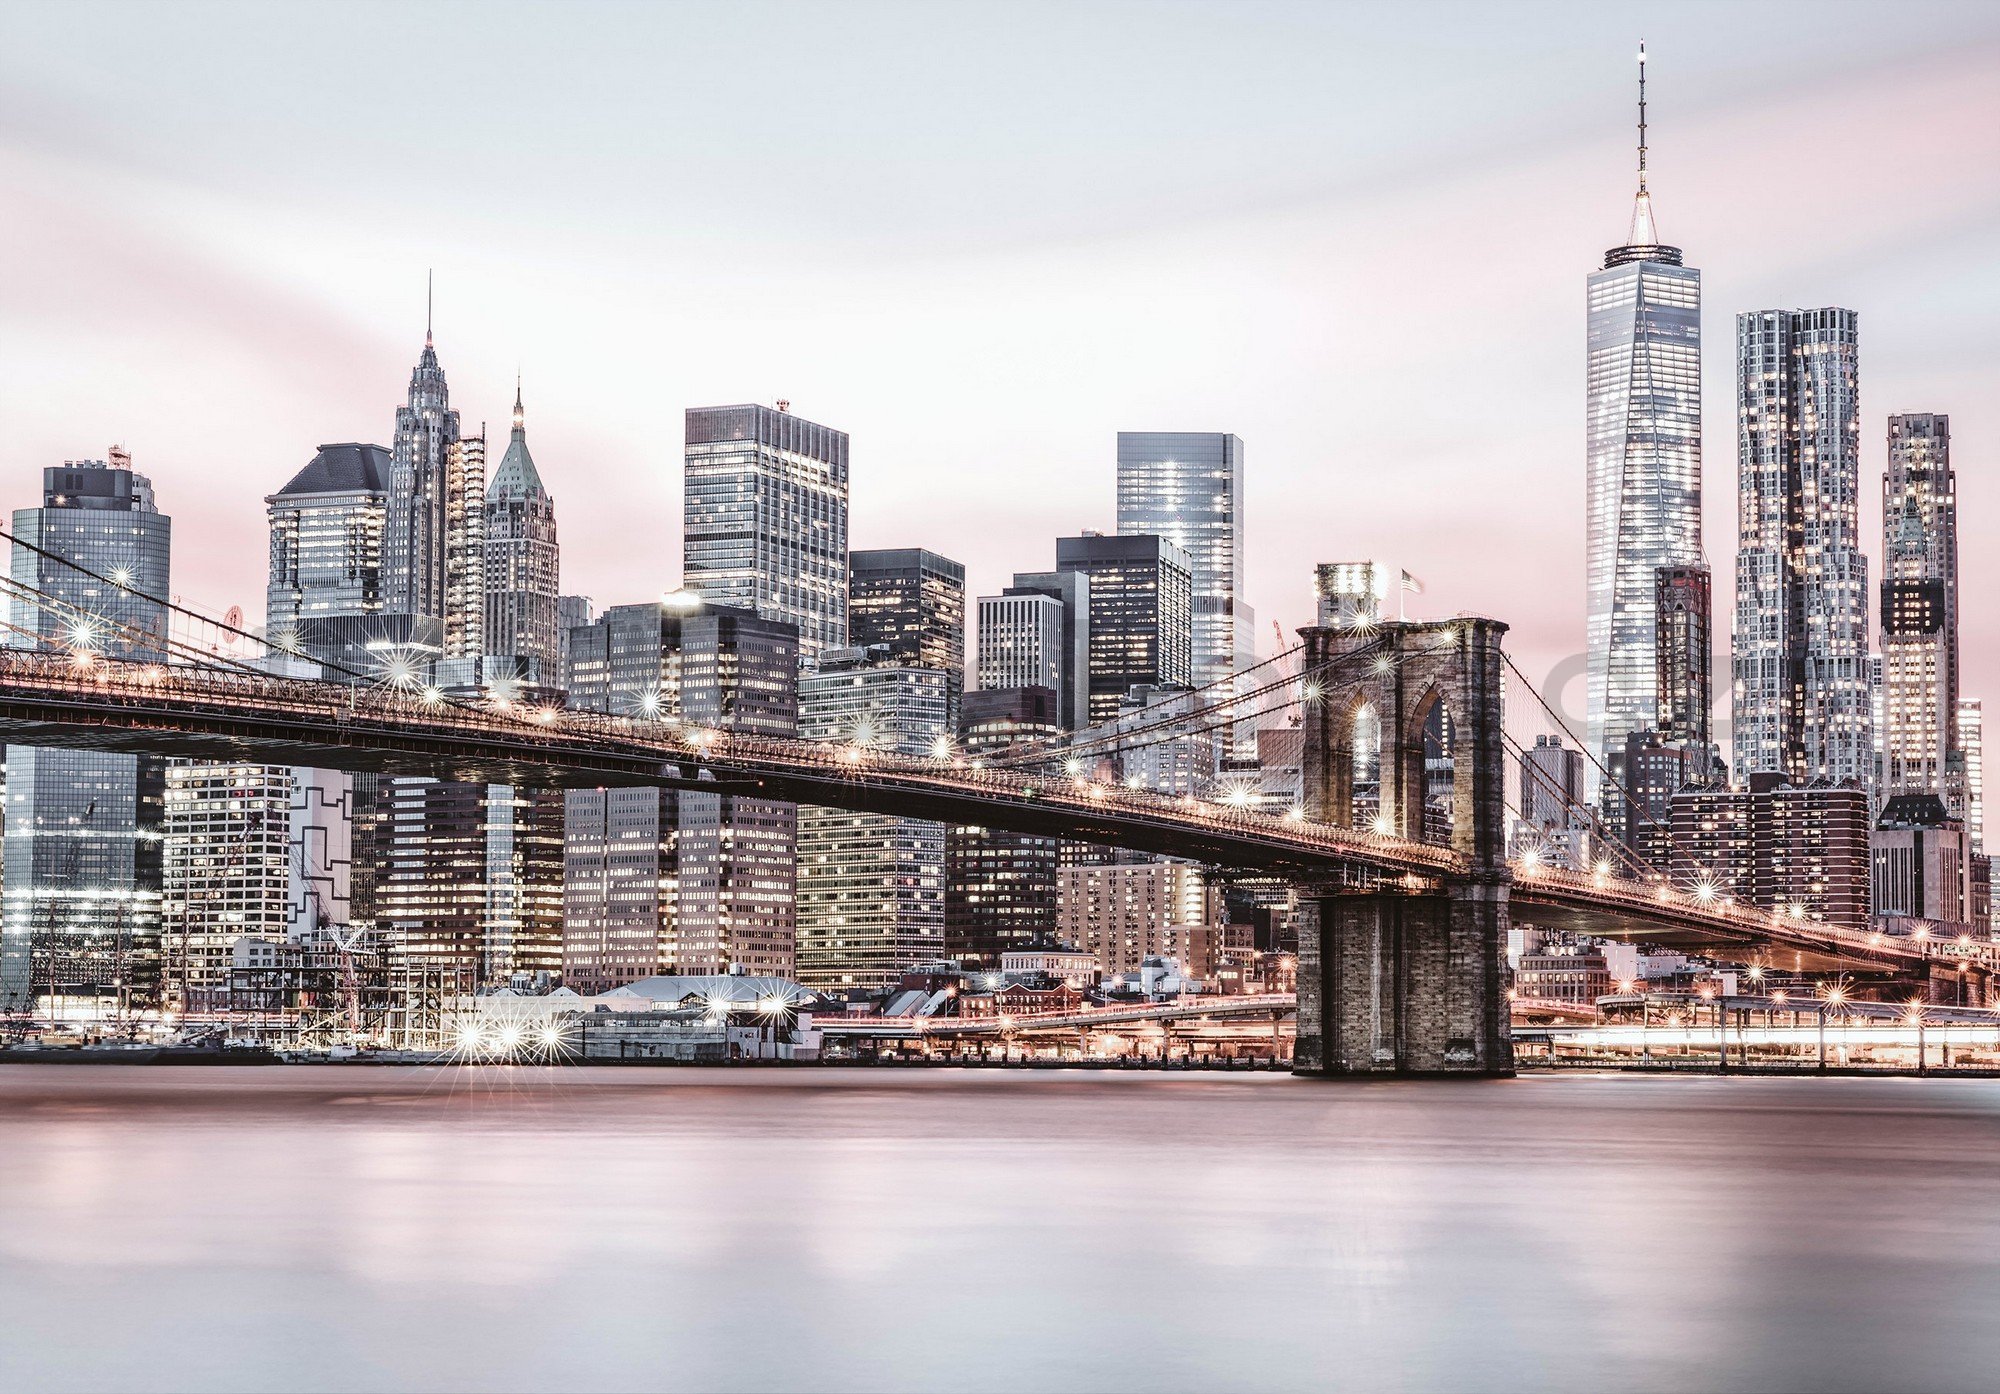 Fototapeta vliesová: Osvětlený Brooklyn Bridge - 368x254 cm